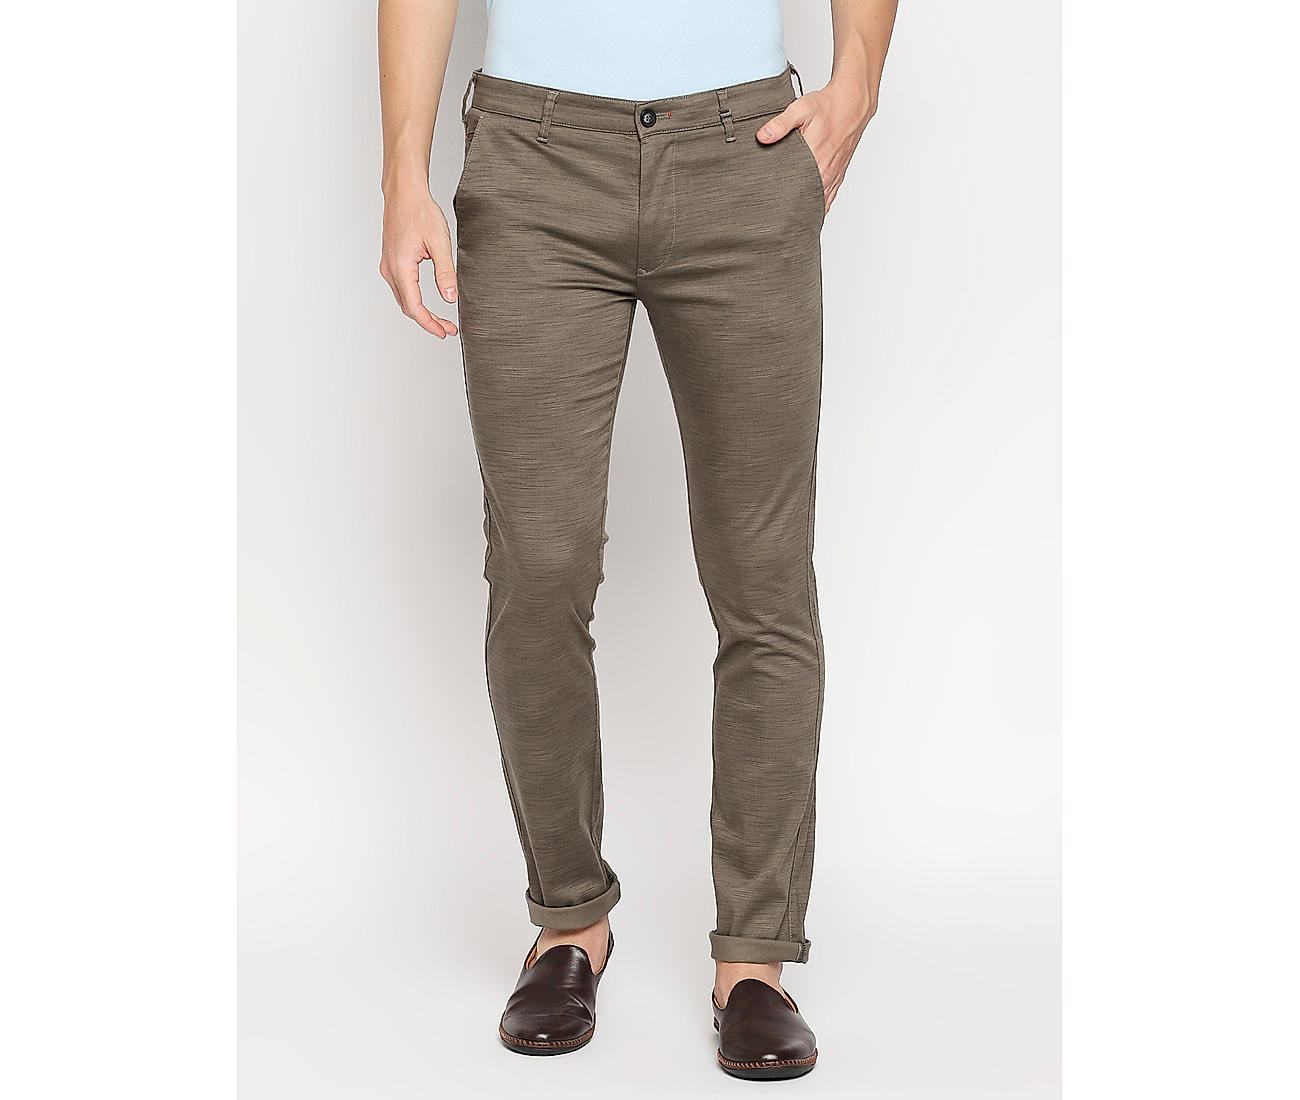 Buy Beige Solid Slim Fit Trousers for Men Online at Killer Jeans  493751